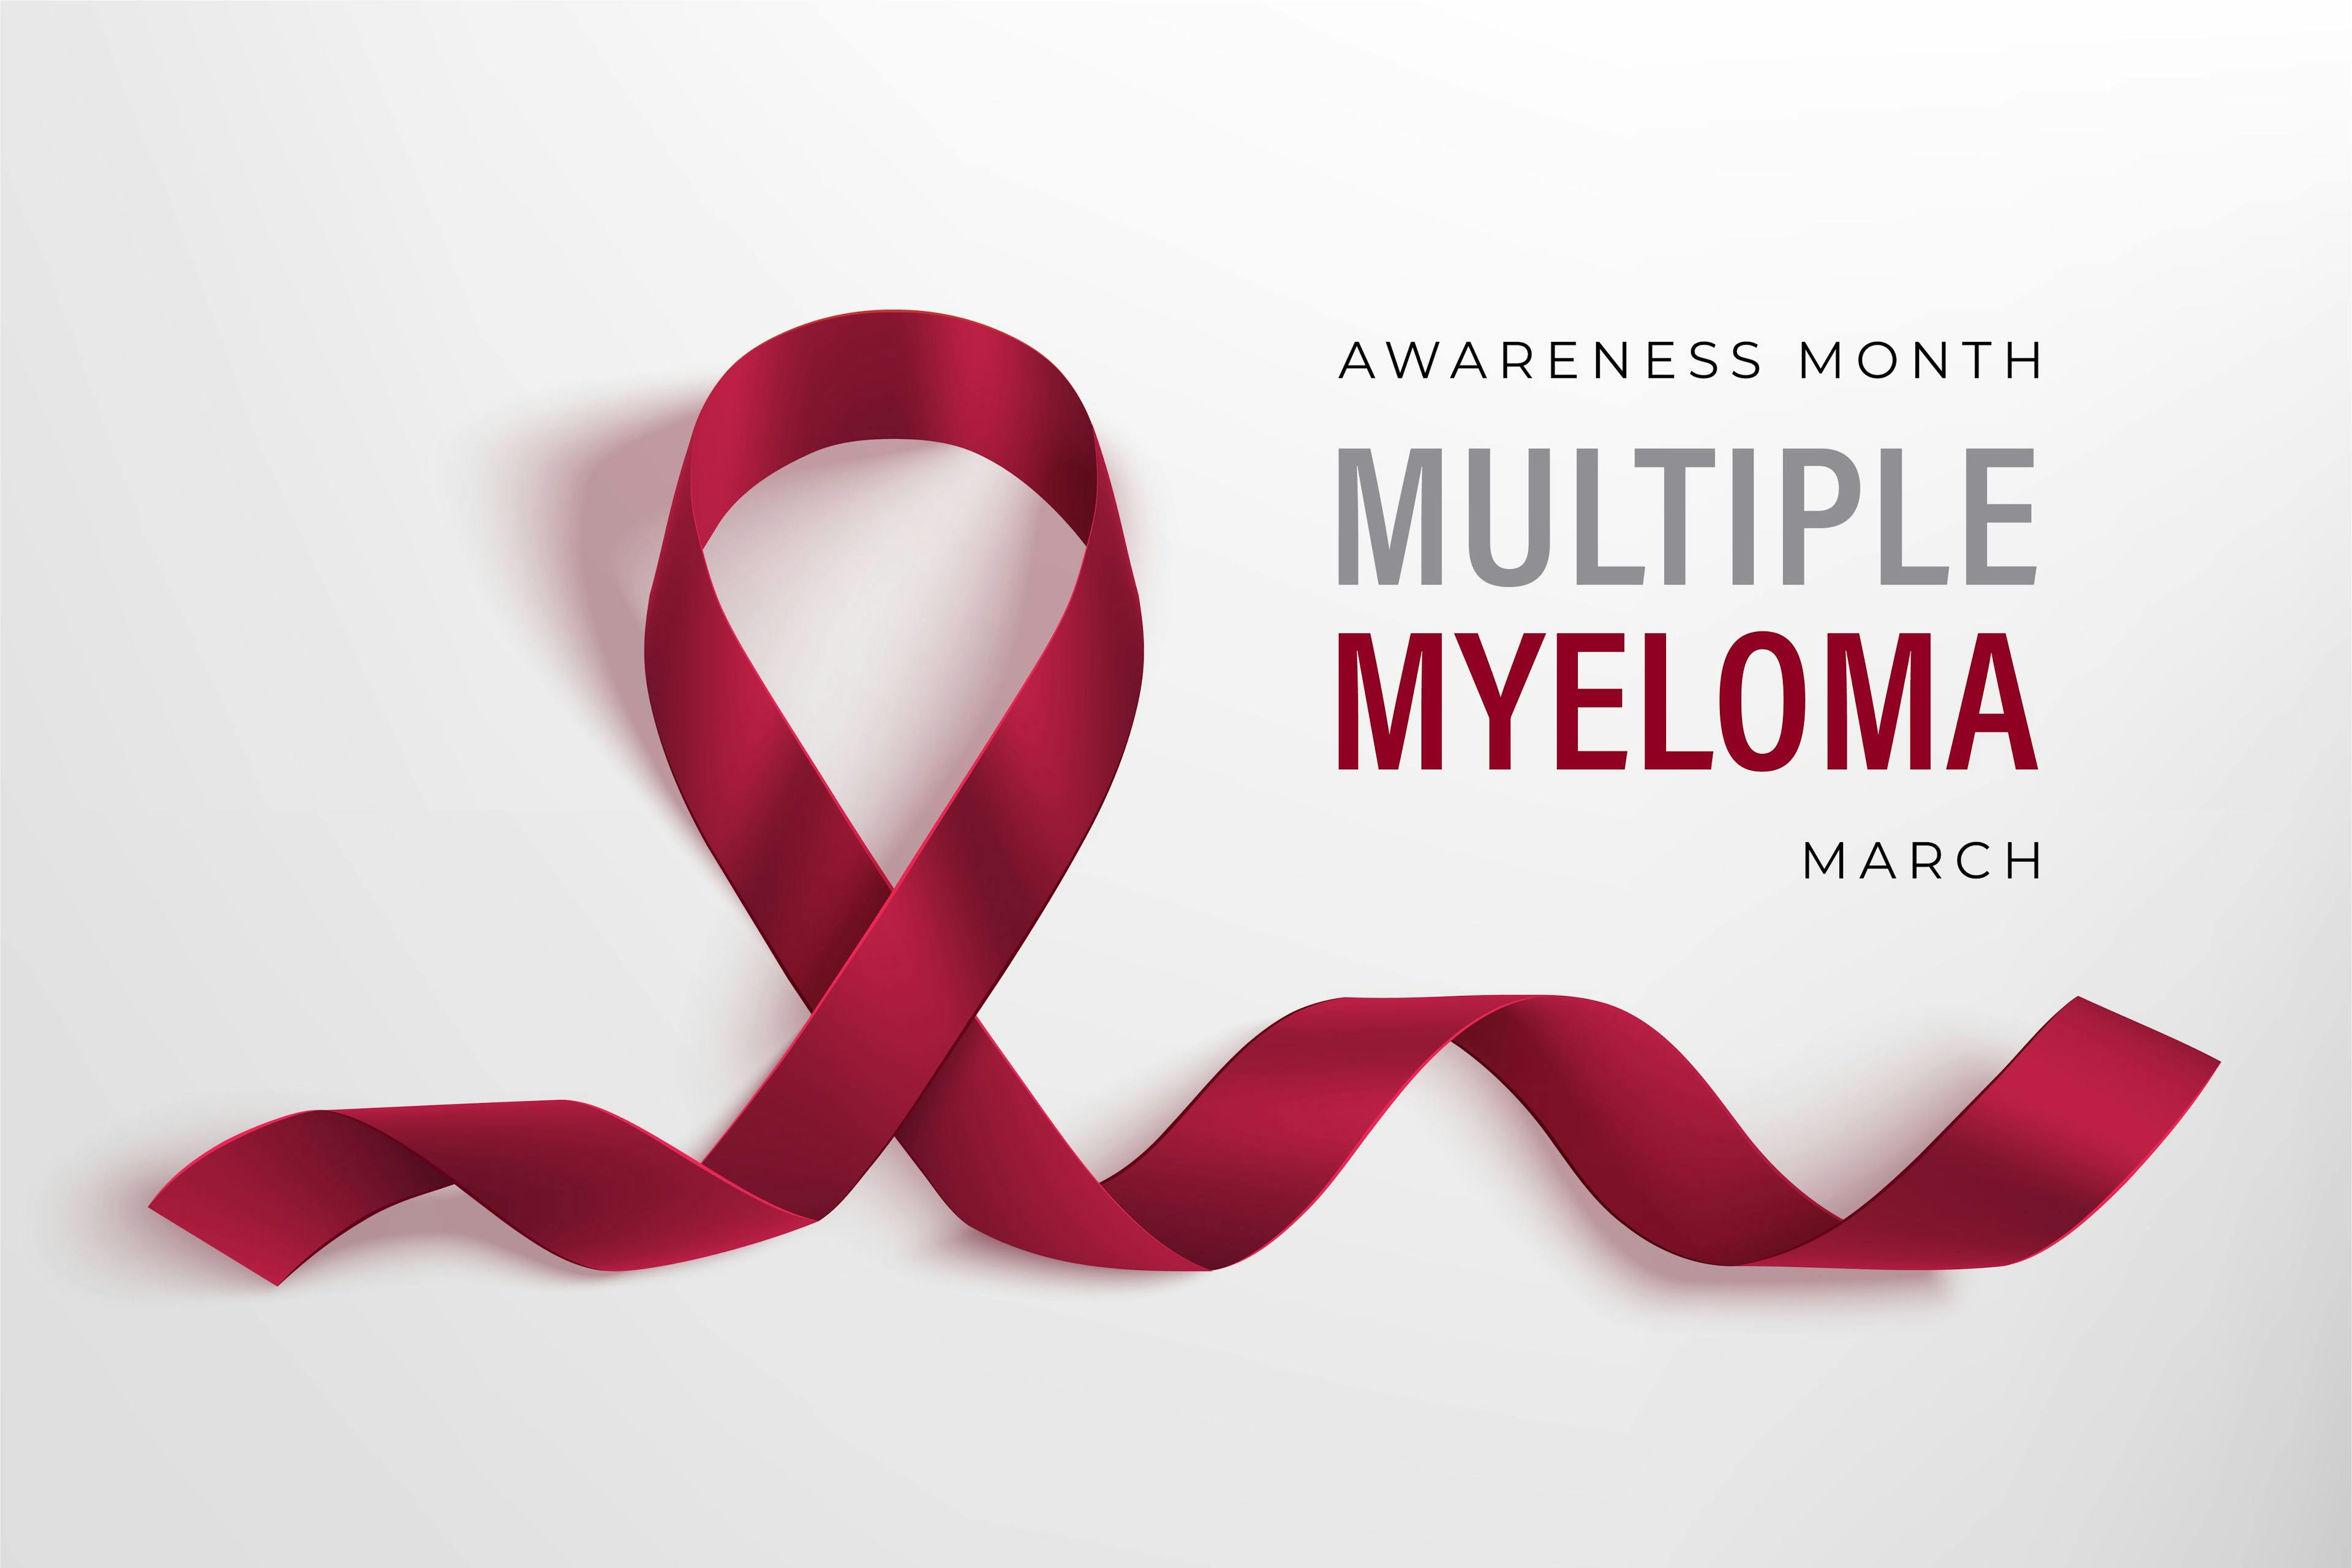 Multiple myeloma awareness month -- Image credit: mirrima | stock.adobe.com